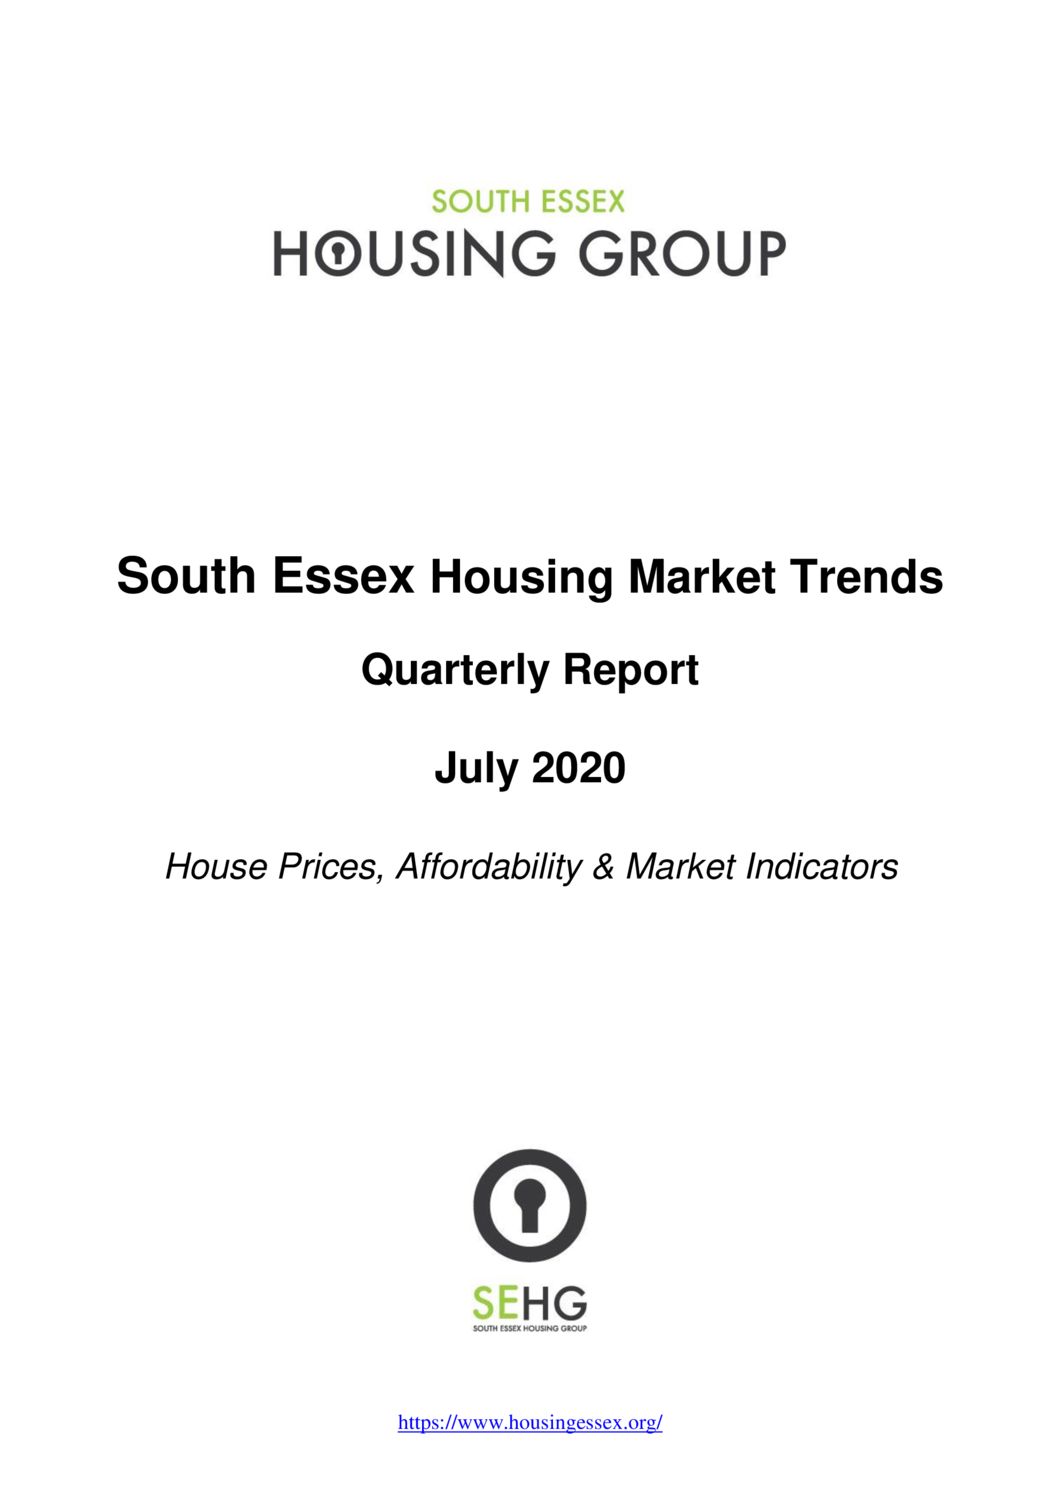 South Essex Housing Market Trends July 2020